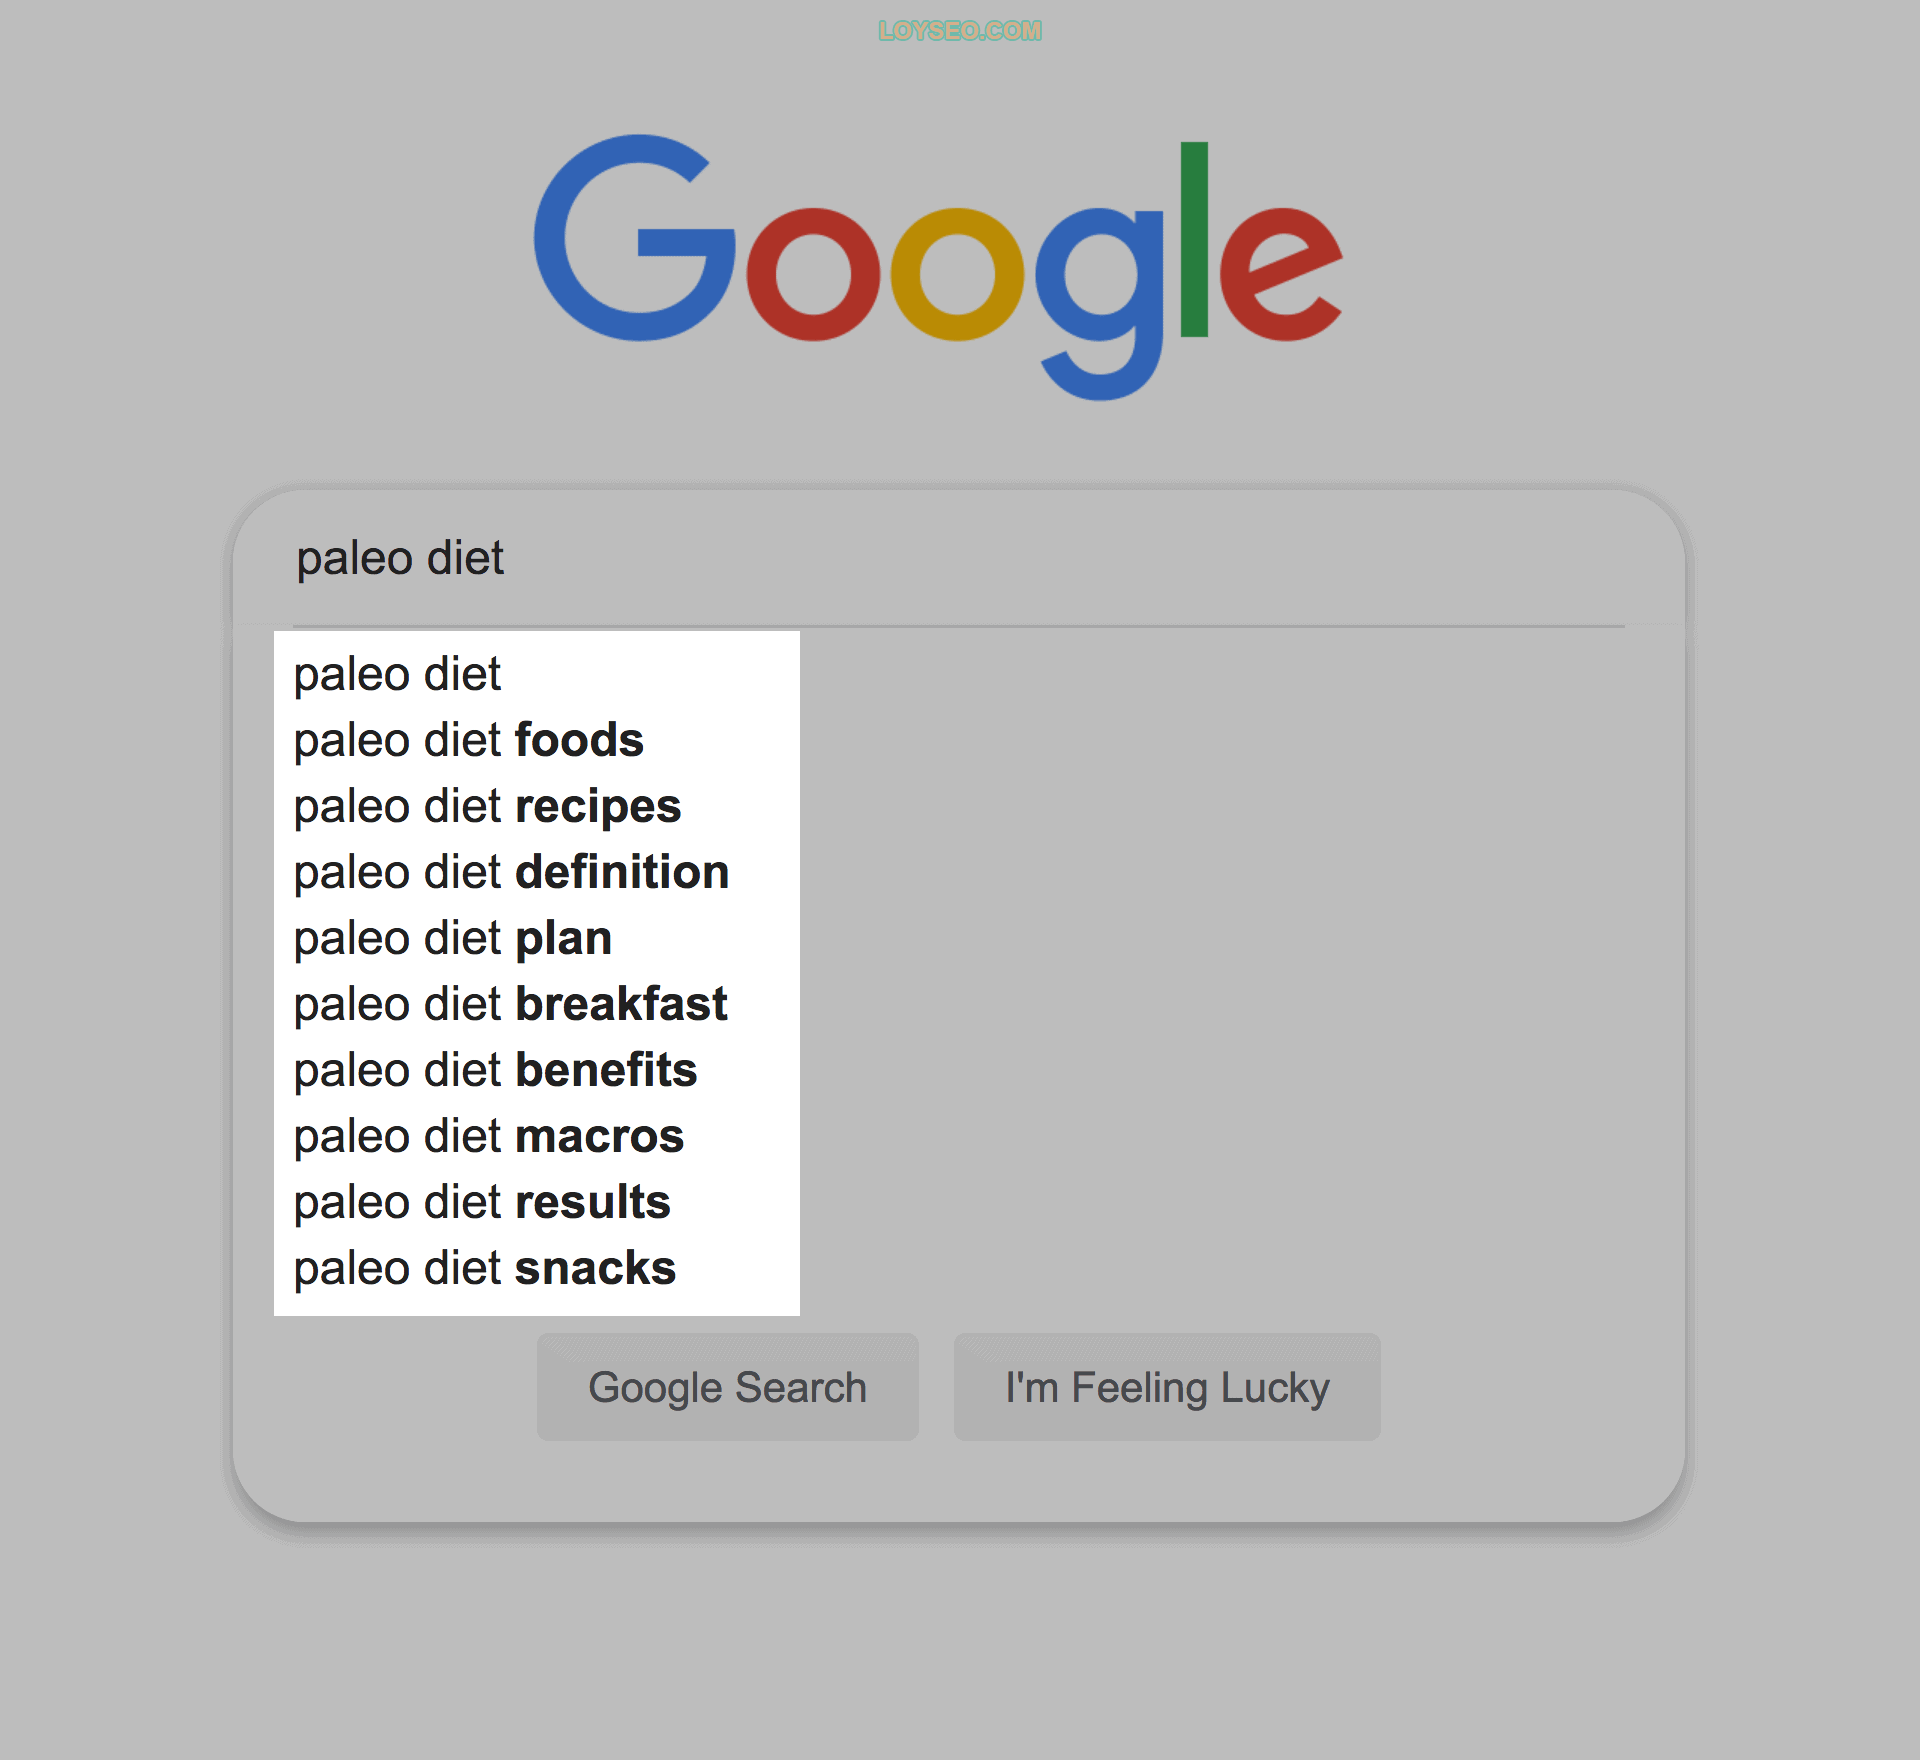 Google autocomplete